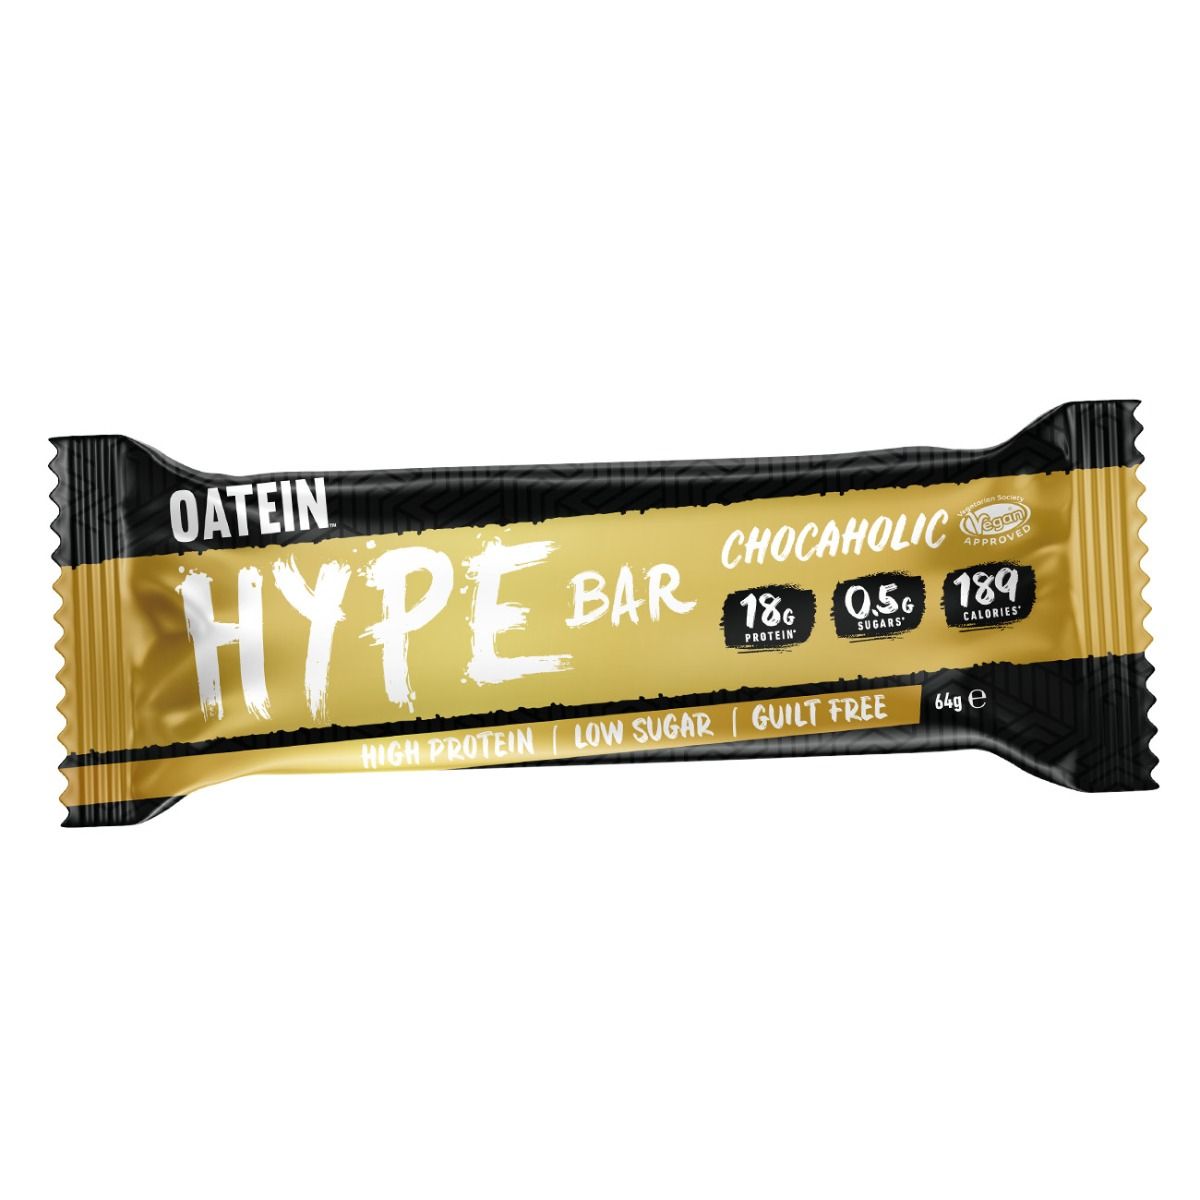 Oatein Hype Bar - Chocaholic 60g